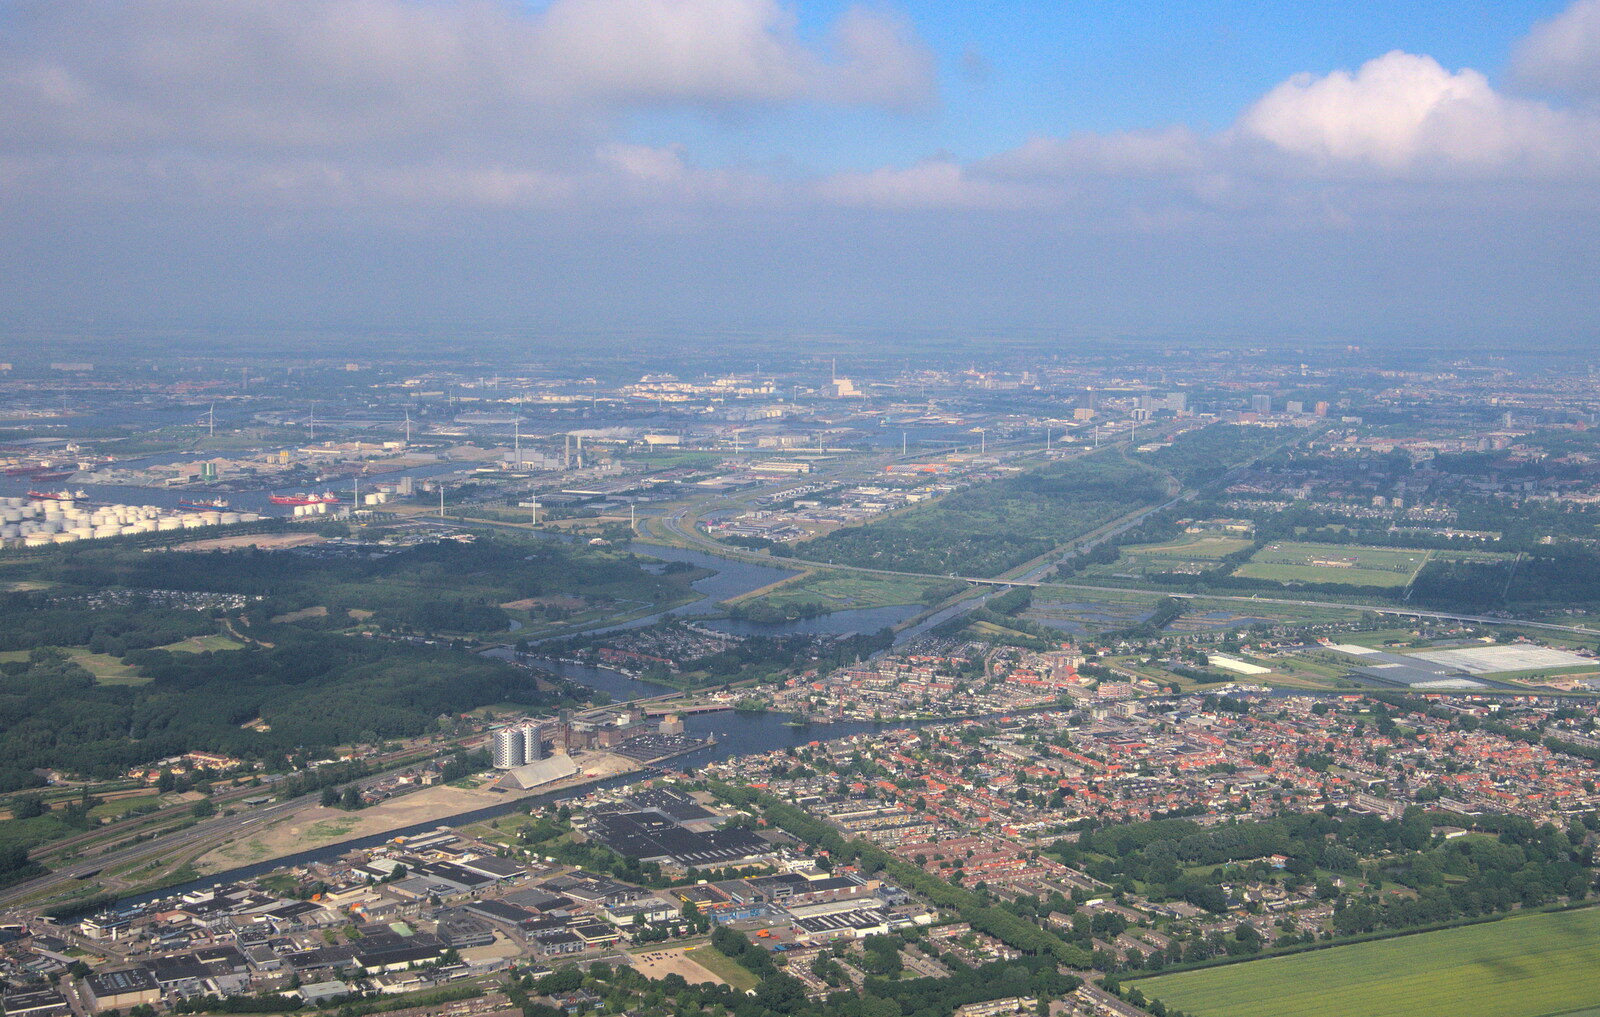 Industrial Amsterdam from A Postcard from Utrecht, Nederlands - 10th June 2018